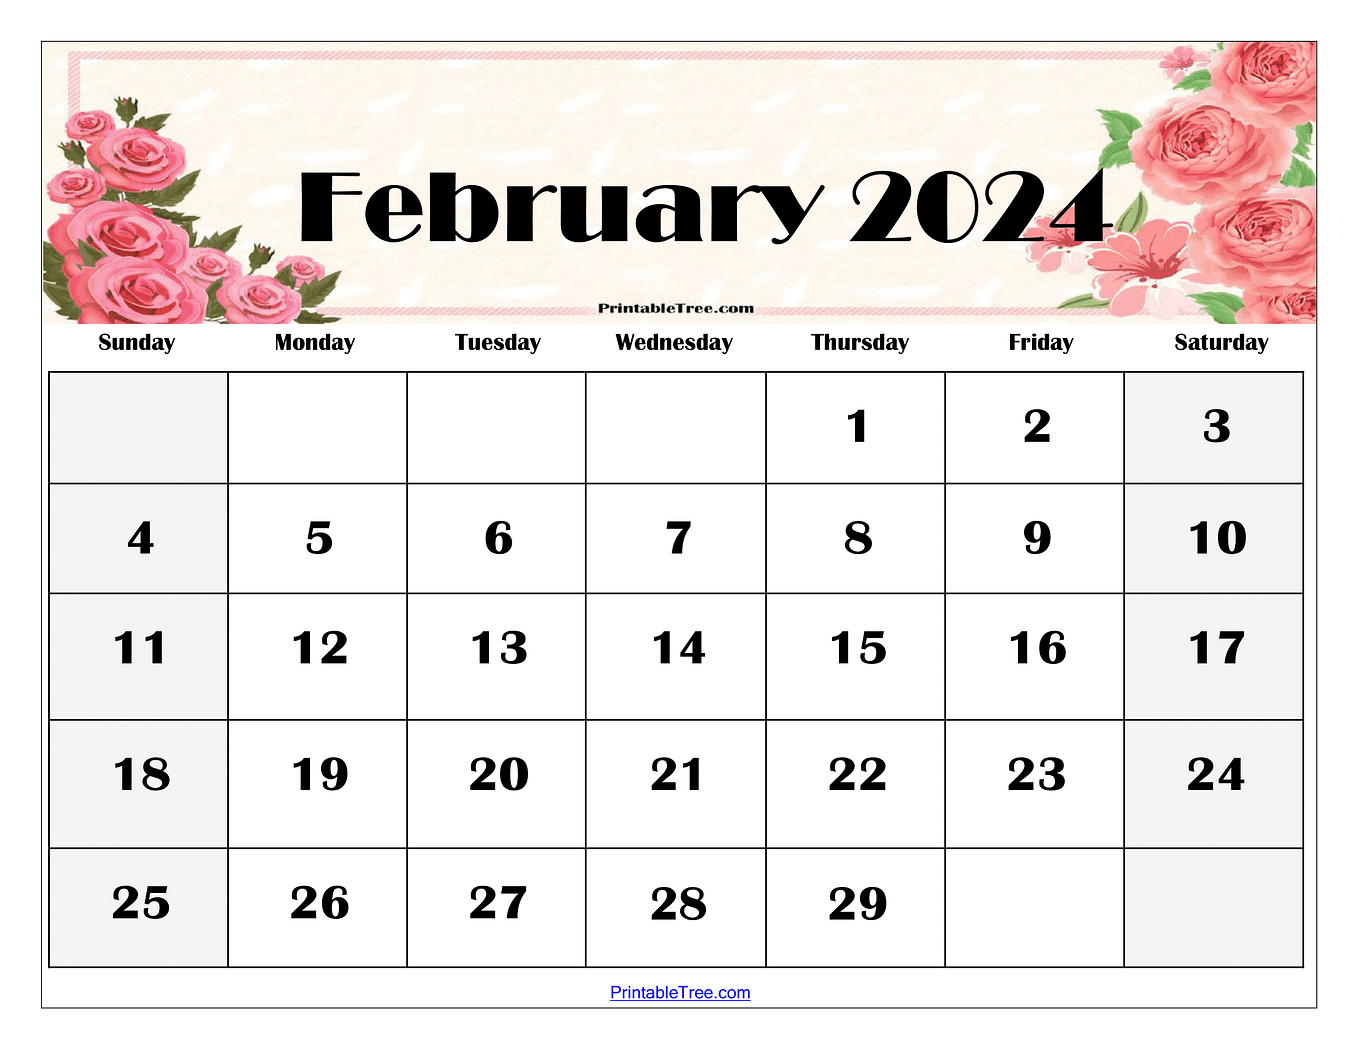 January 2024 Calendar Printable - Printable Tree - Medium